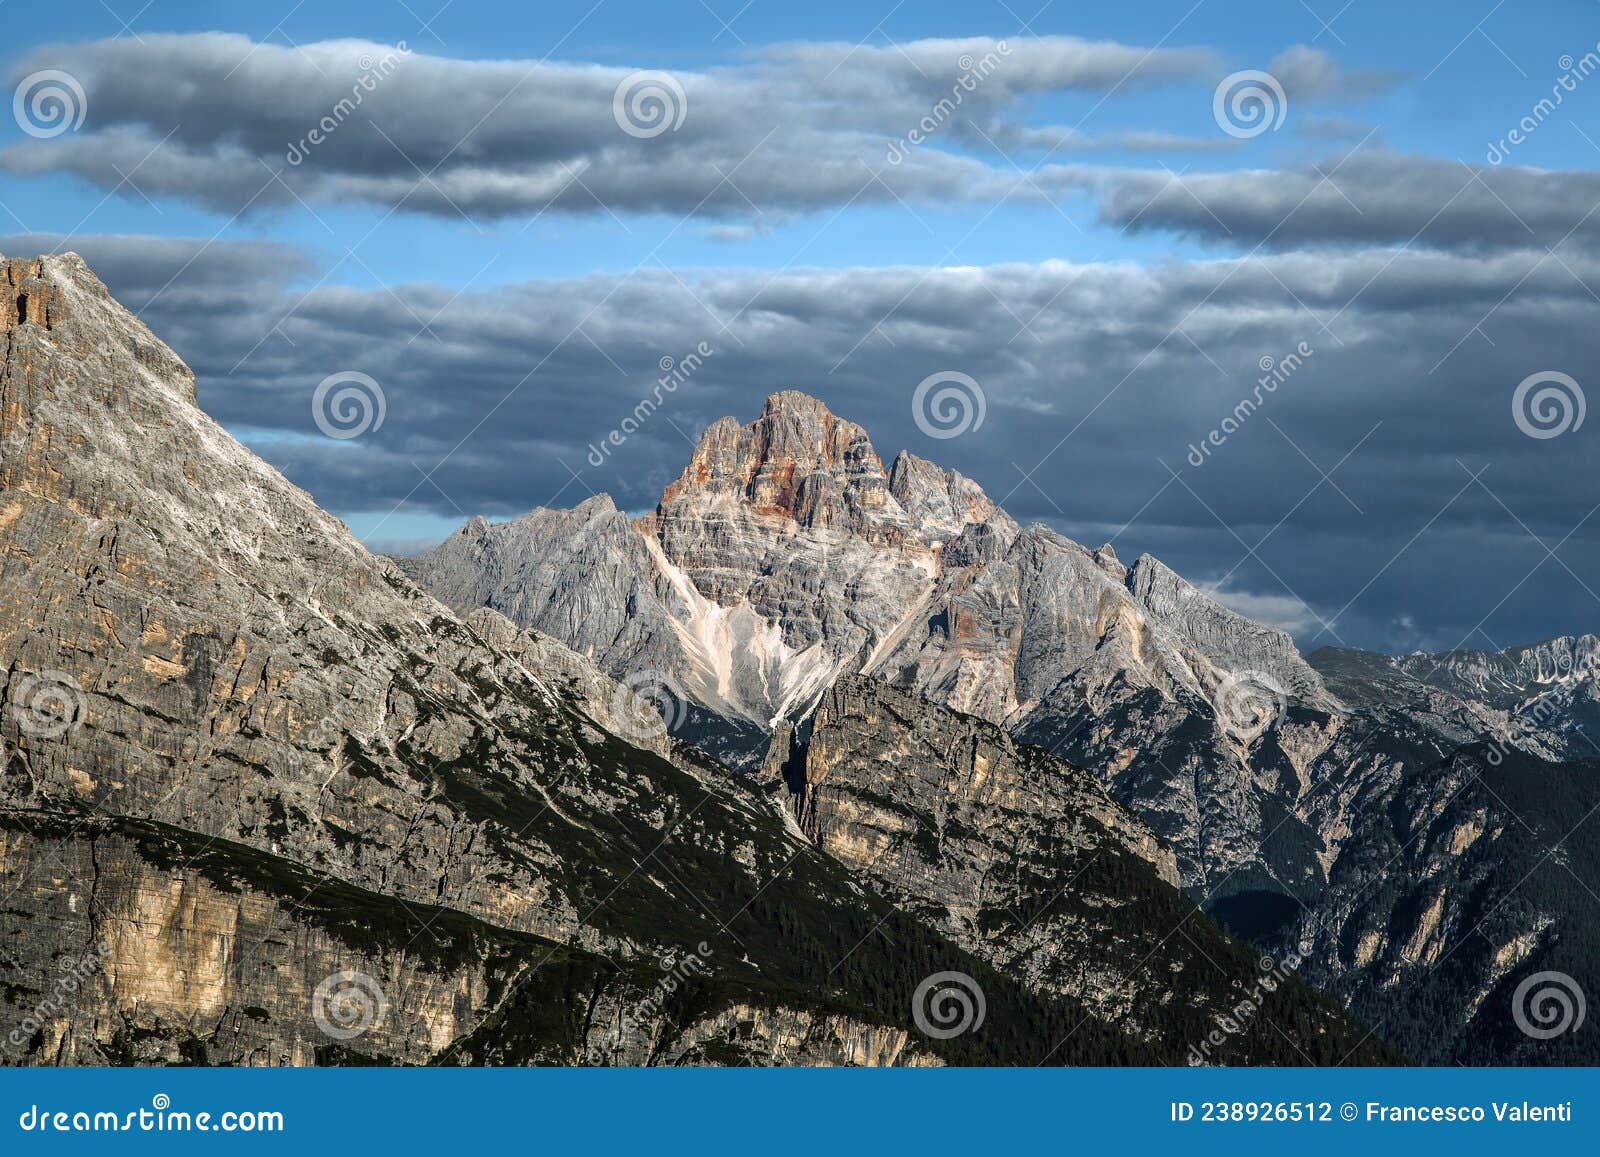 monte rudo in italian dolomite alps, italy, trentino alto adige